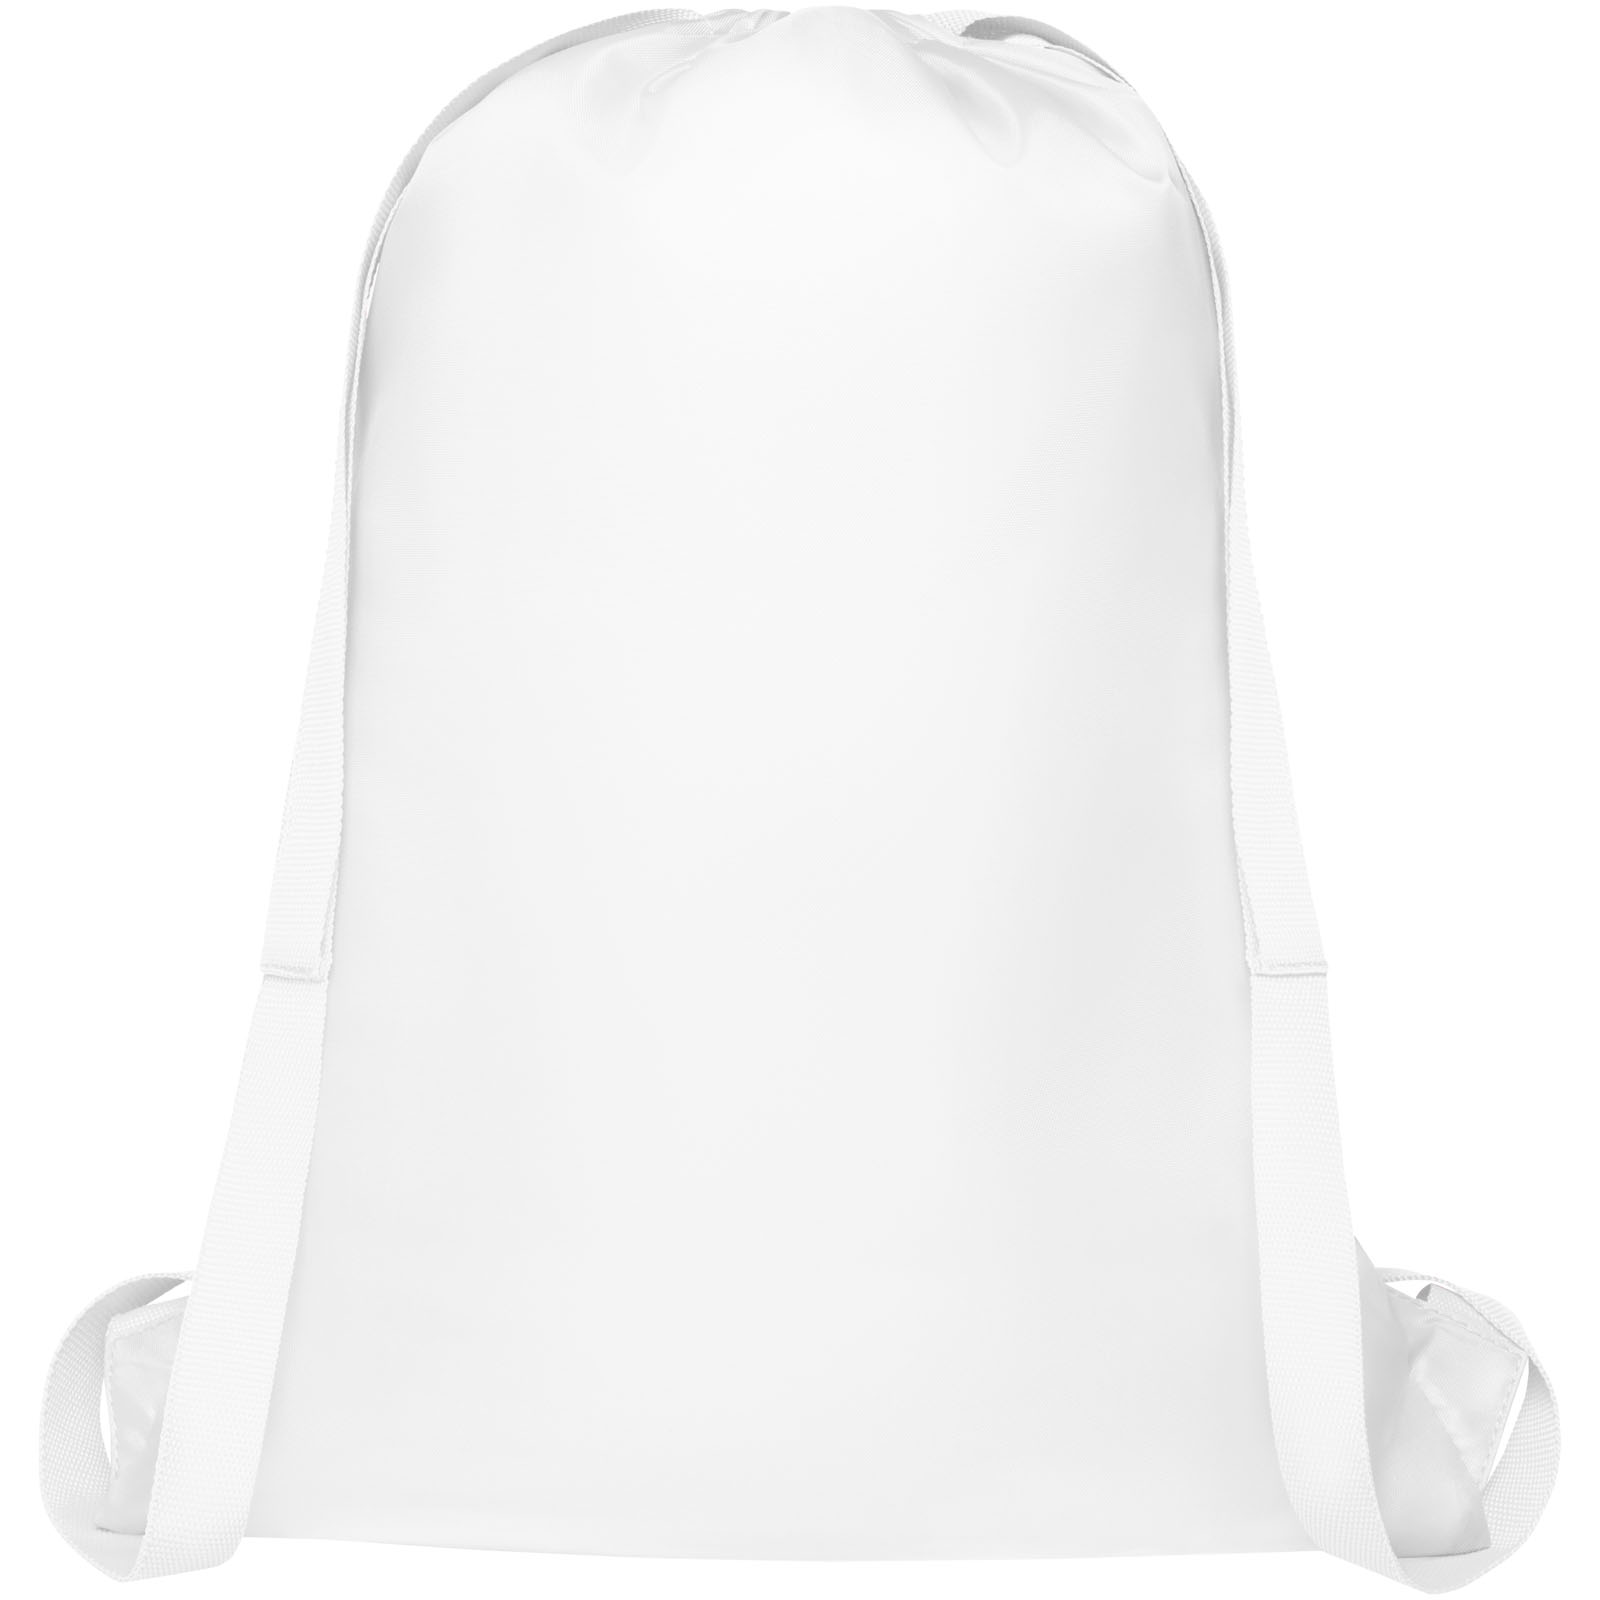 Advertising Drawstring Bags - Nadi mesh drawstring bag 5L - 2